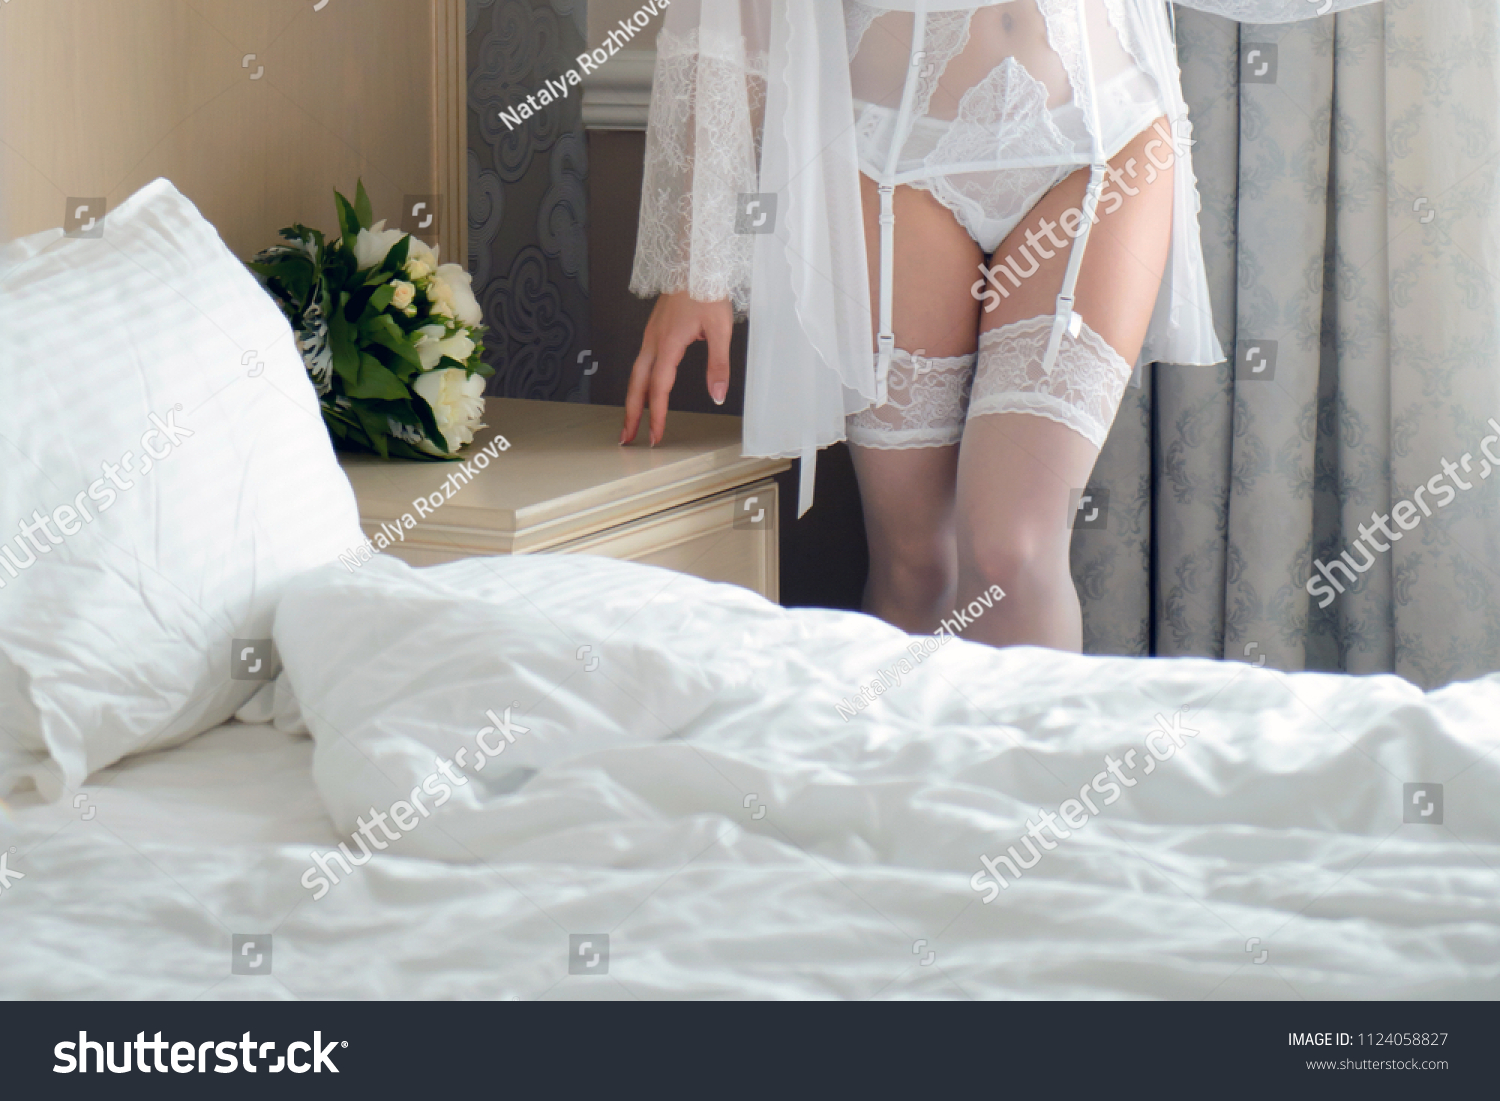 Wedding Sex Pictures